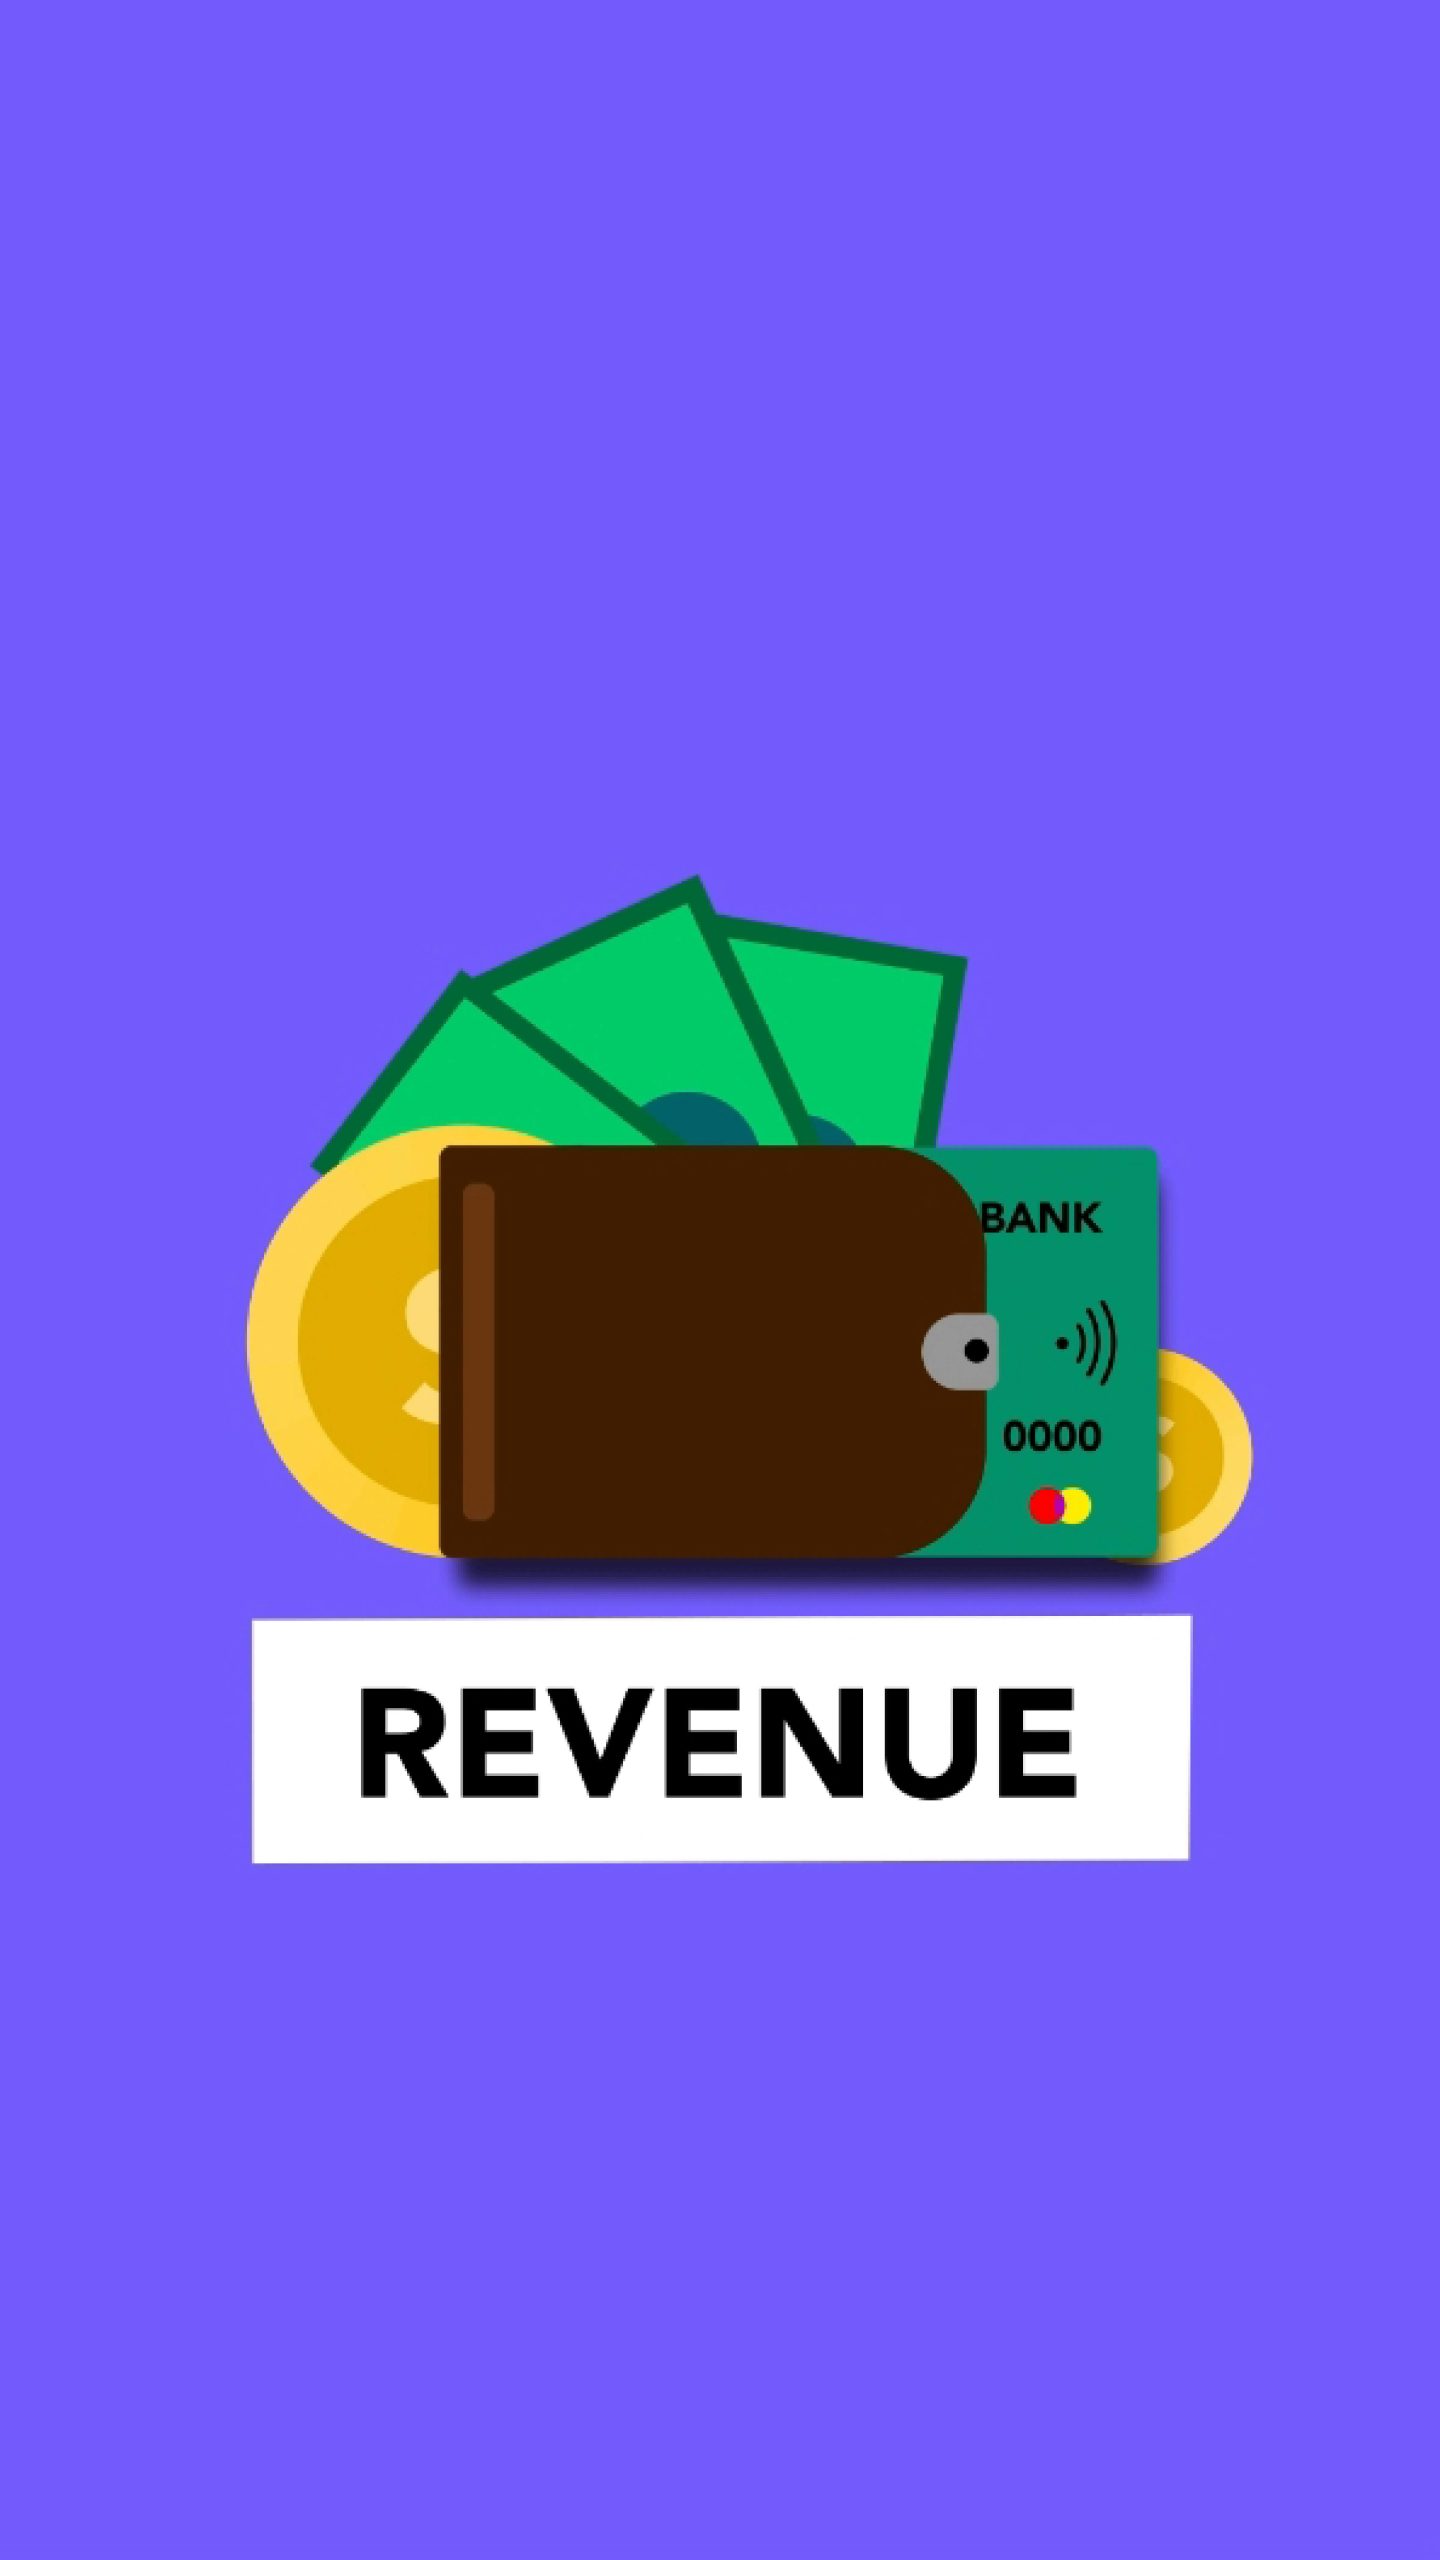 Google AMP and ad revenue